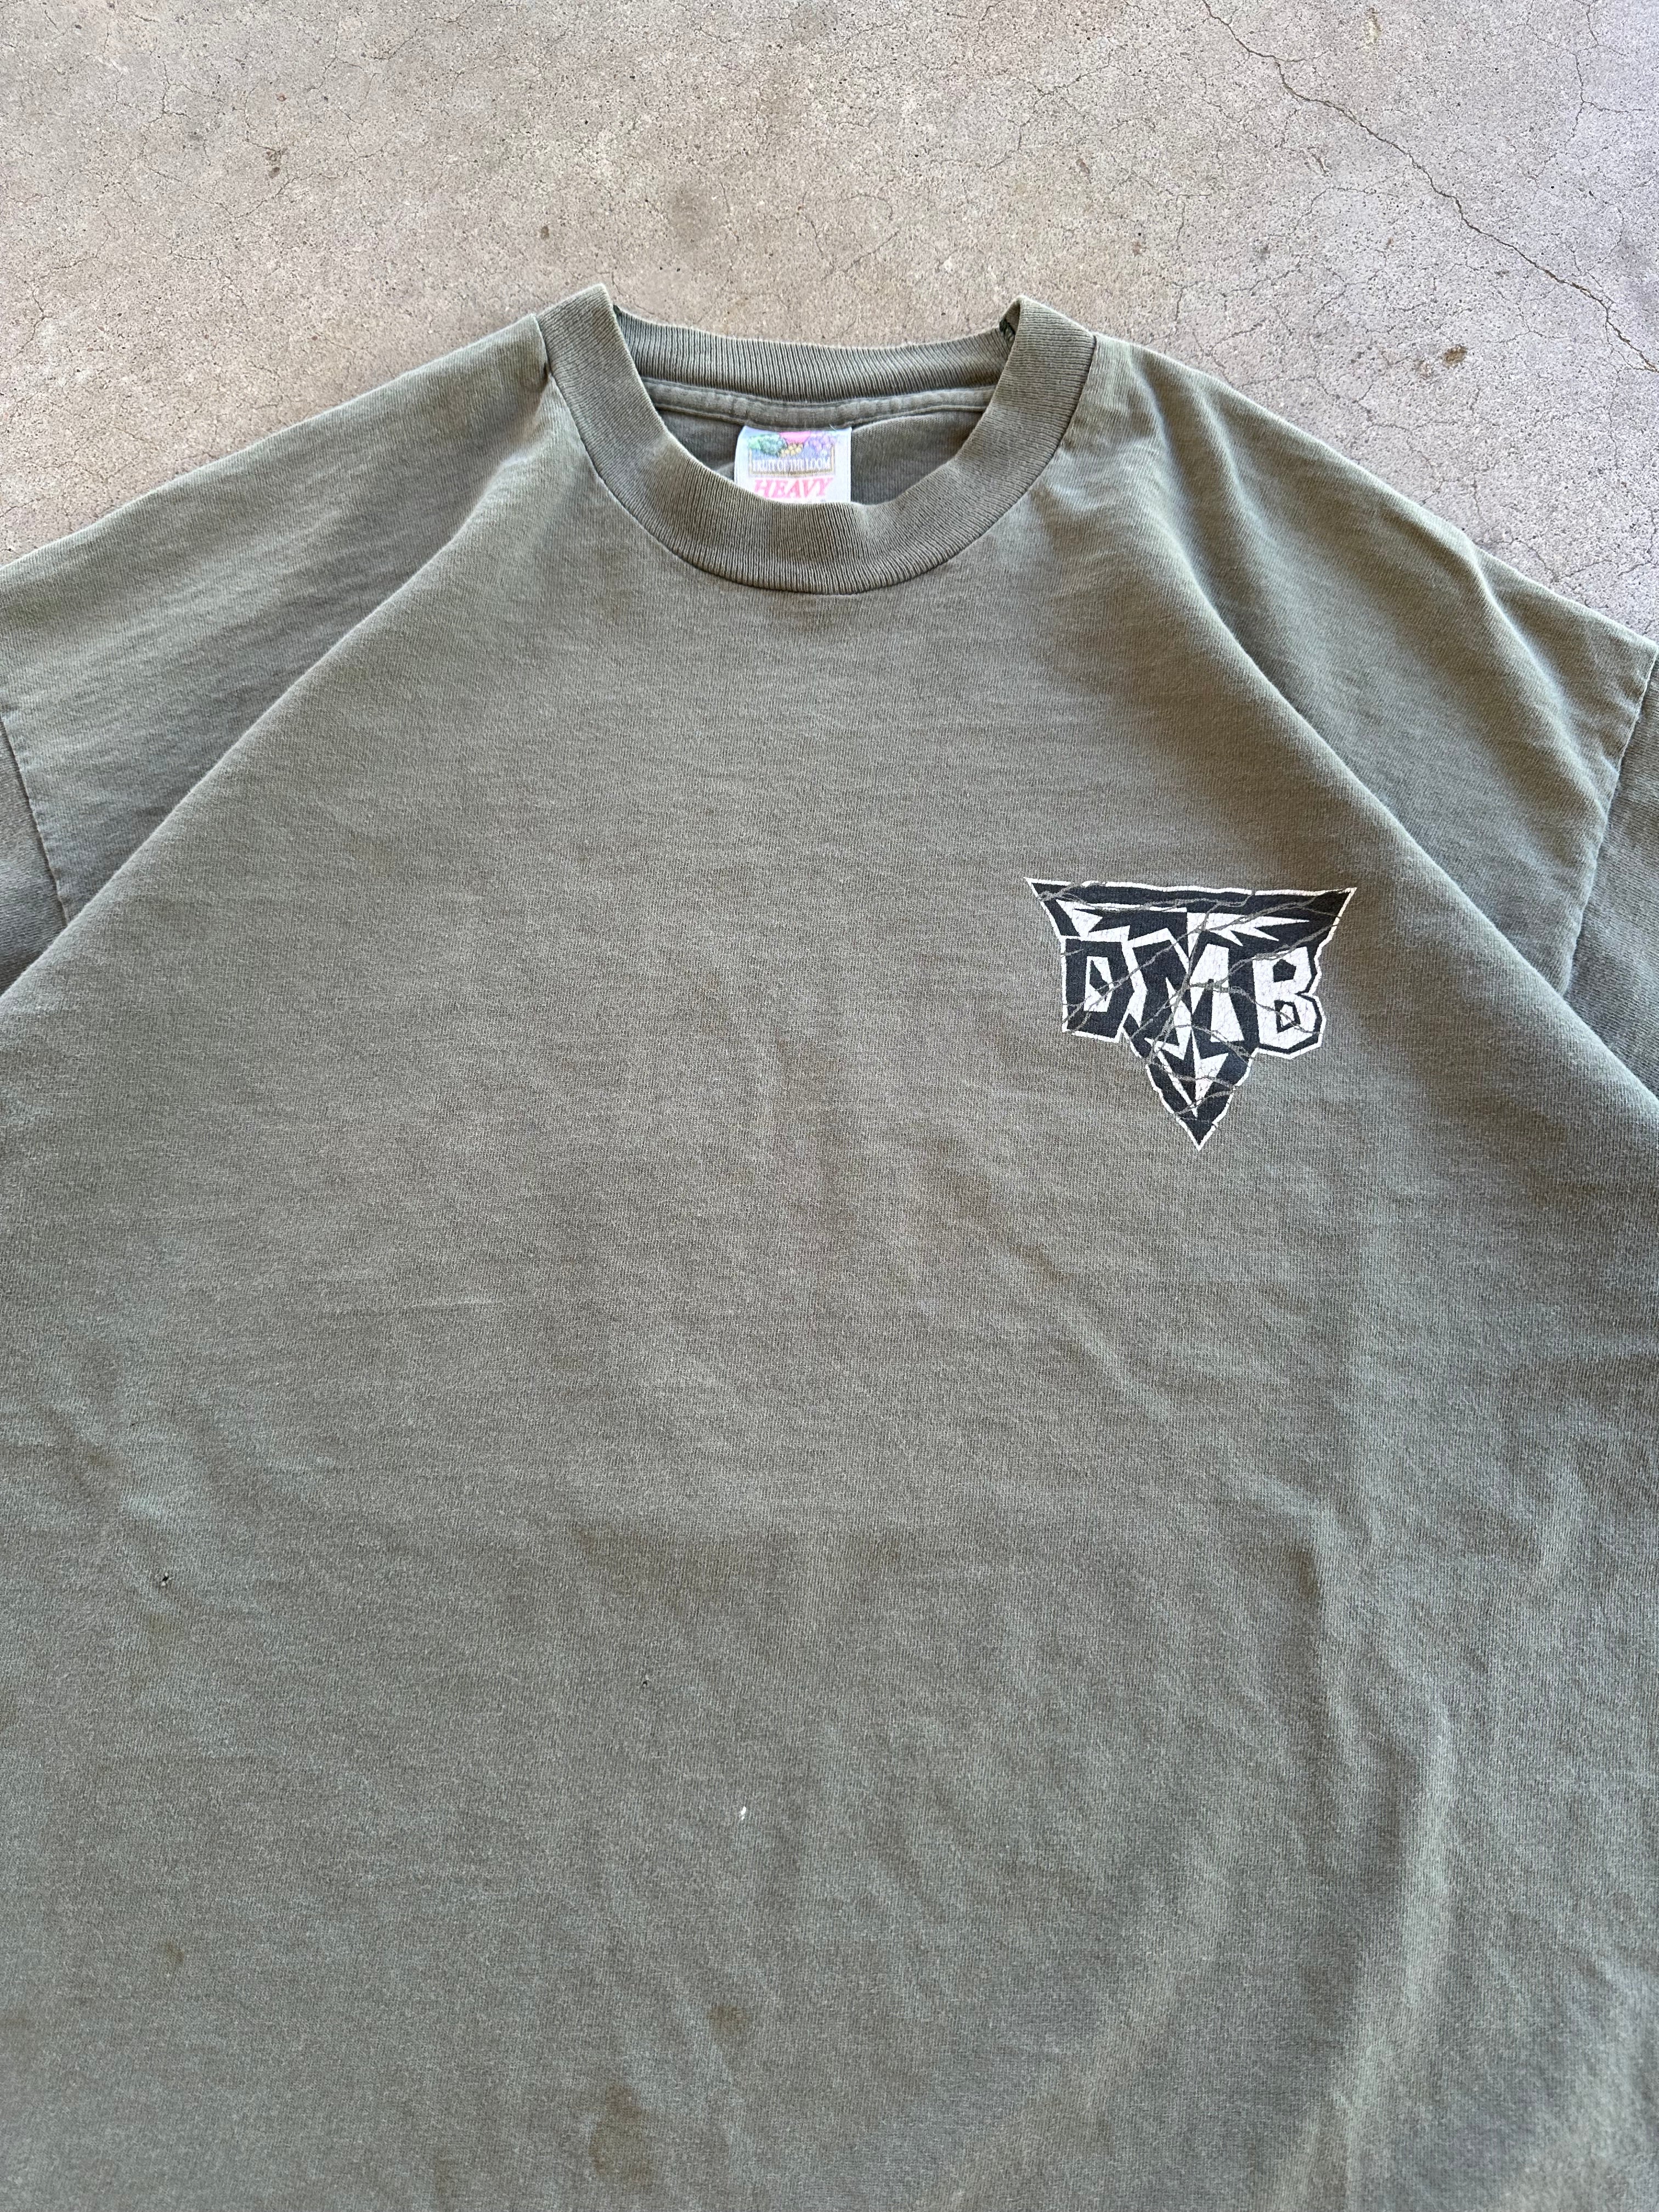 1990s Distressed/Worn Dave Matthew’s Band T-Shirt (XL)